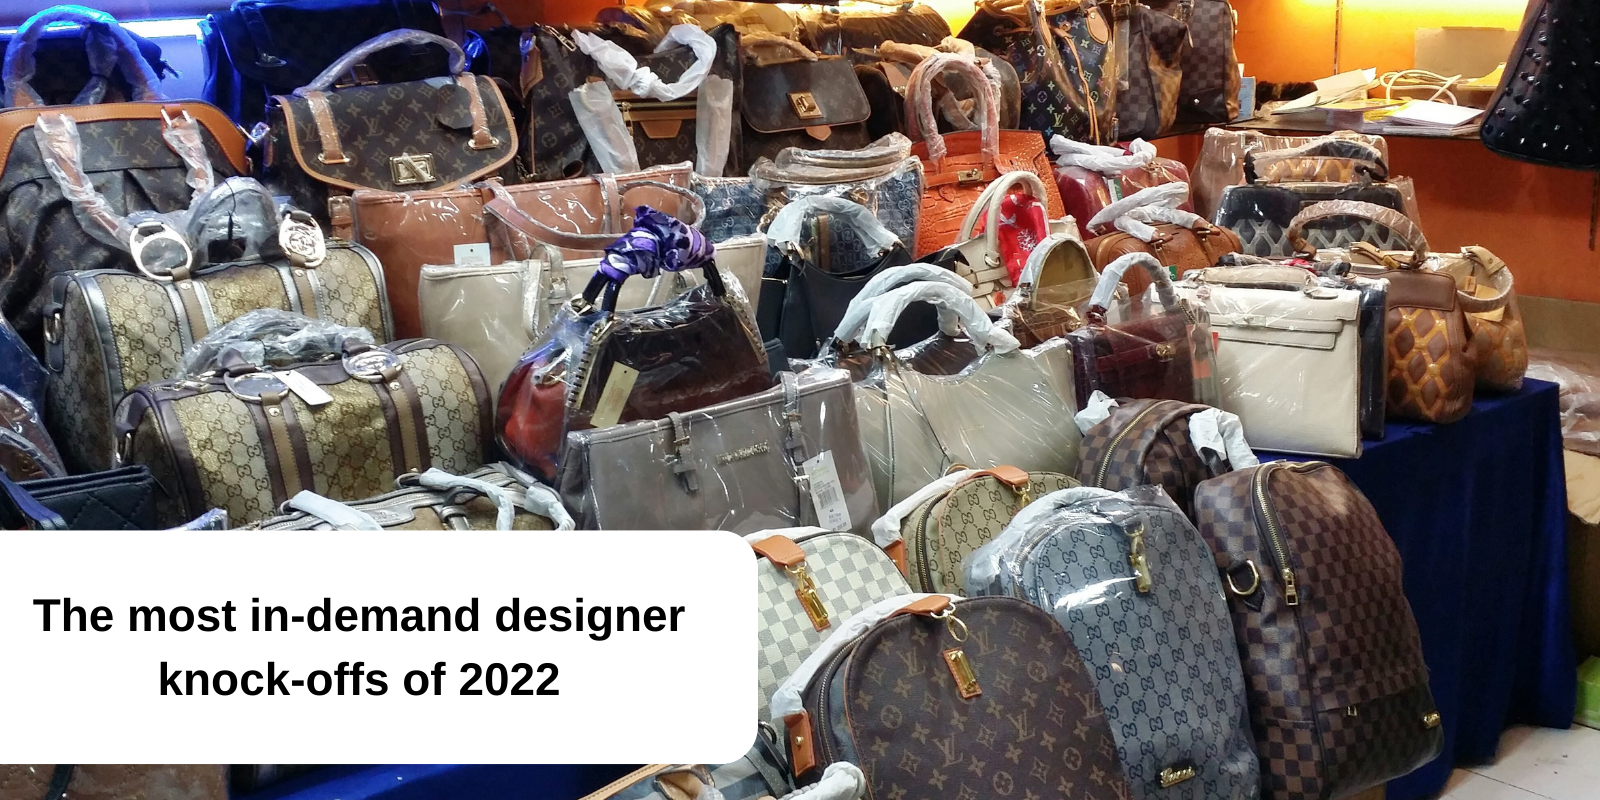 How to spot a counterfeit designer handbag (don't get scammed